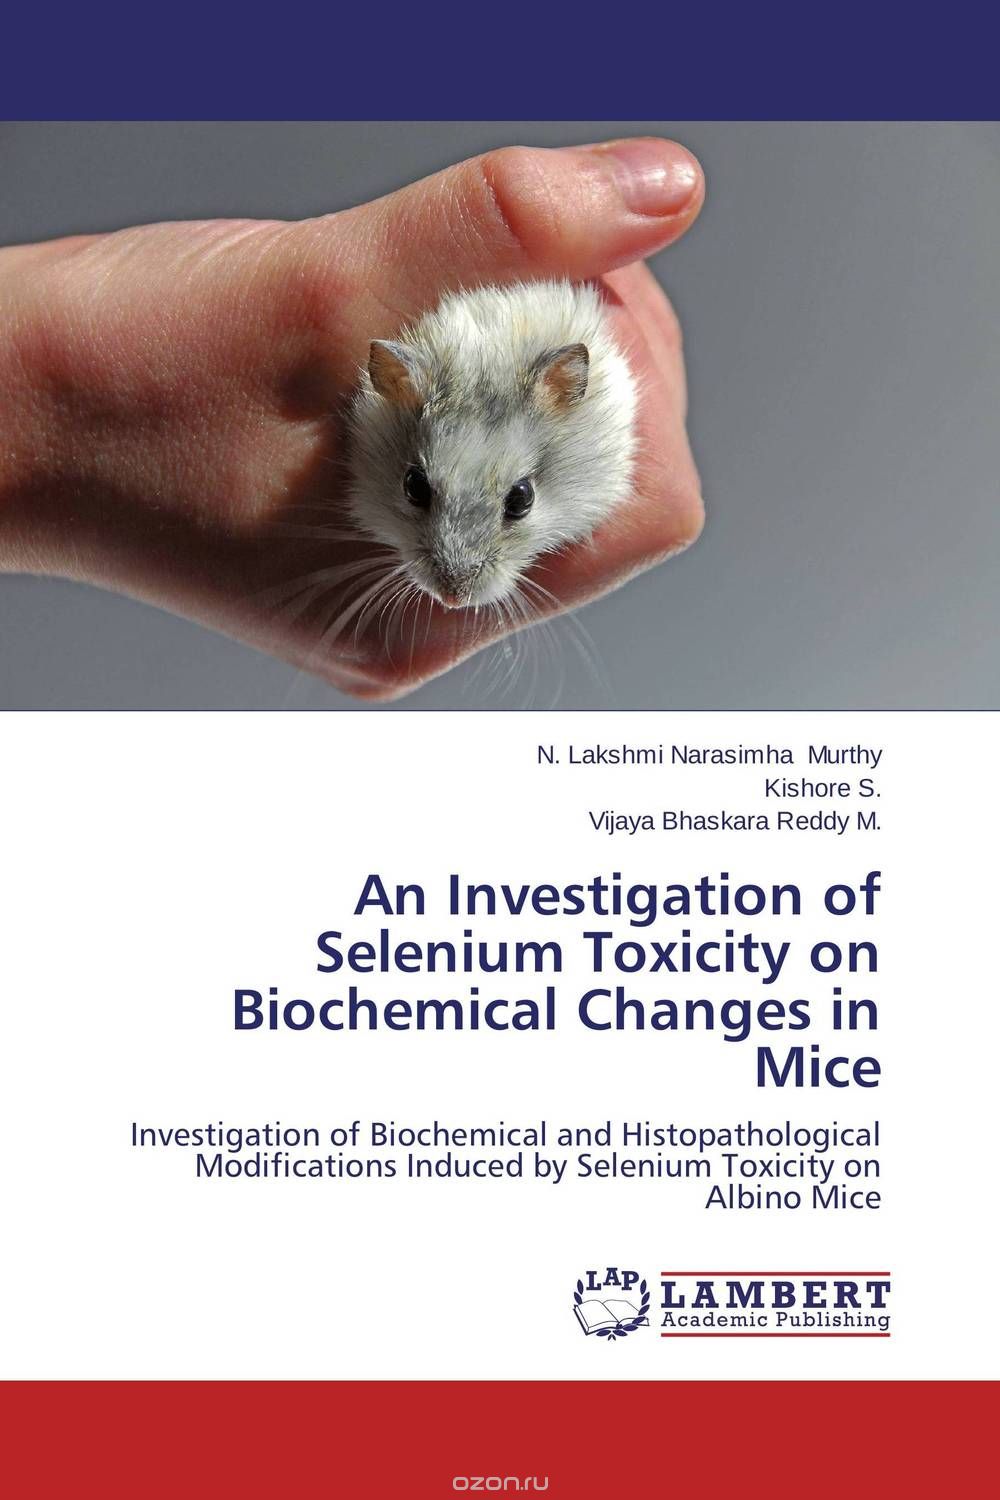 Скачать книгу "An Investigation of Selenium Toxicity on Biochemical Changes in Mice"